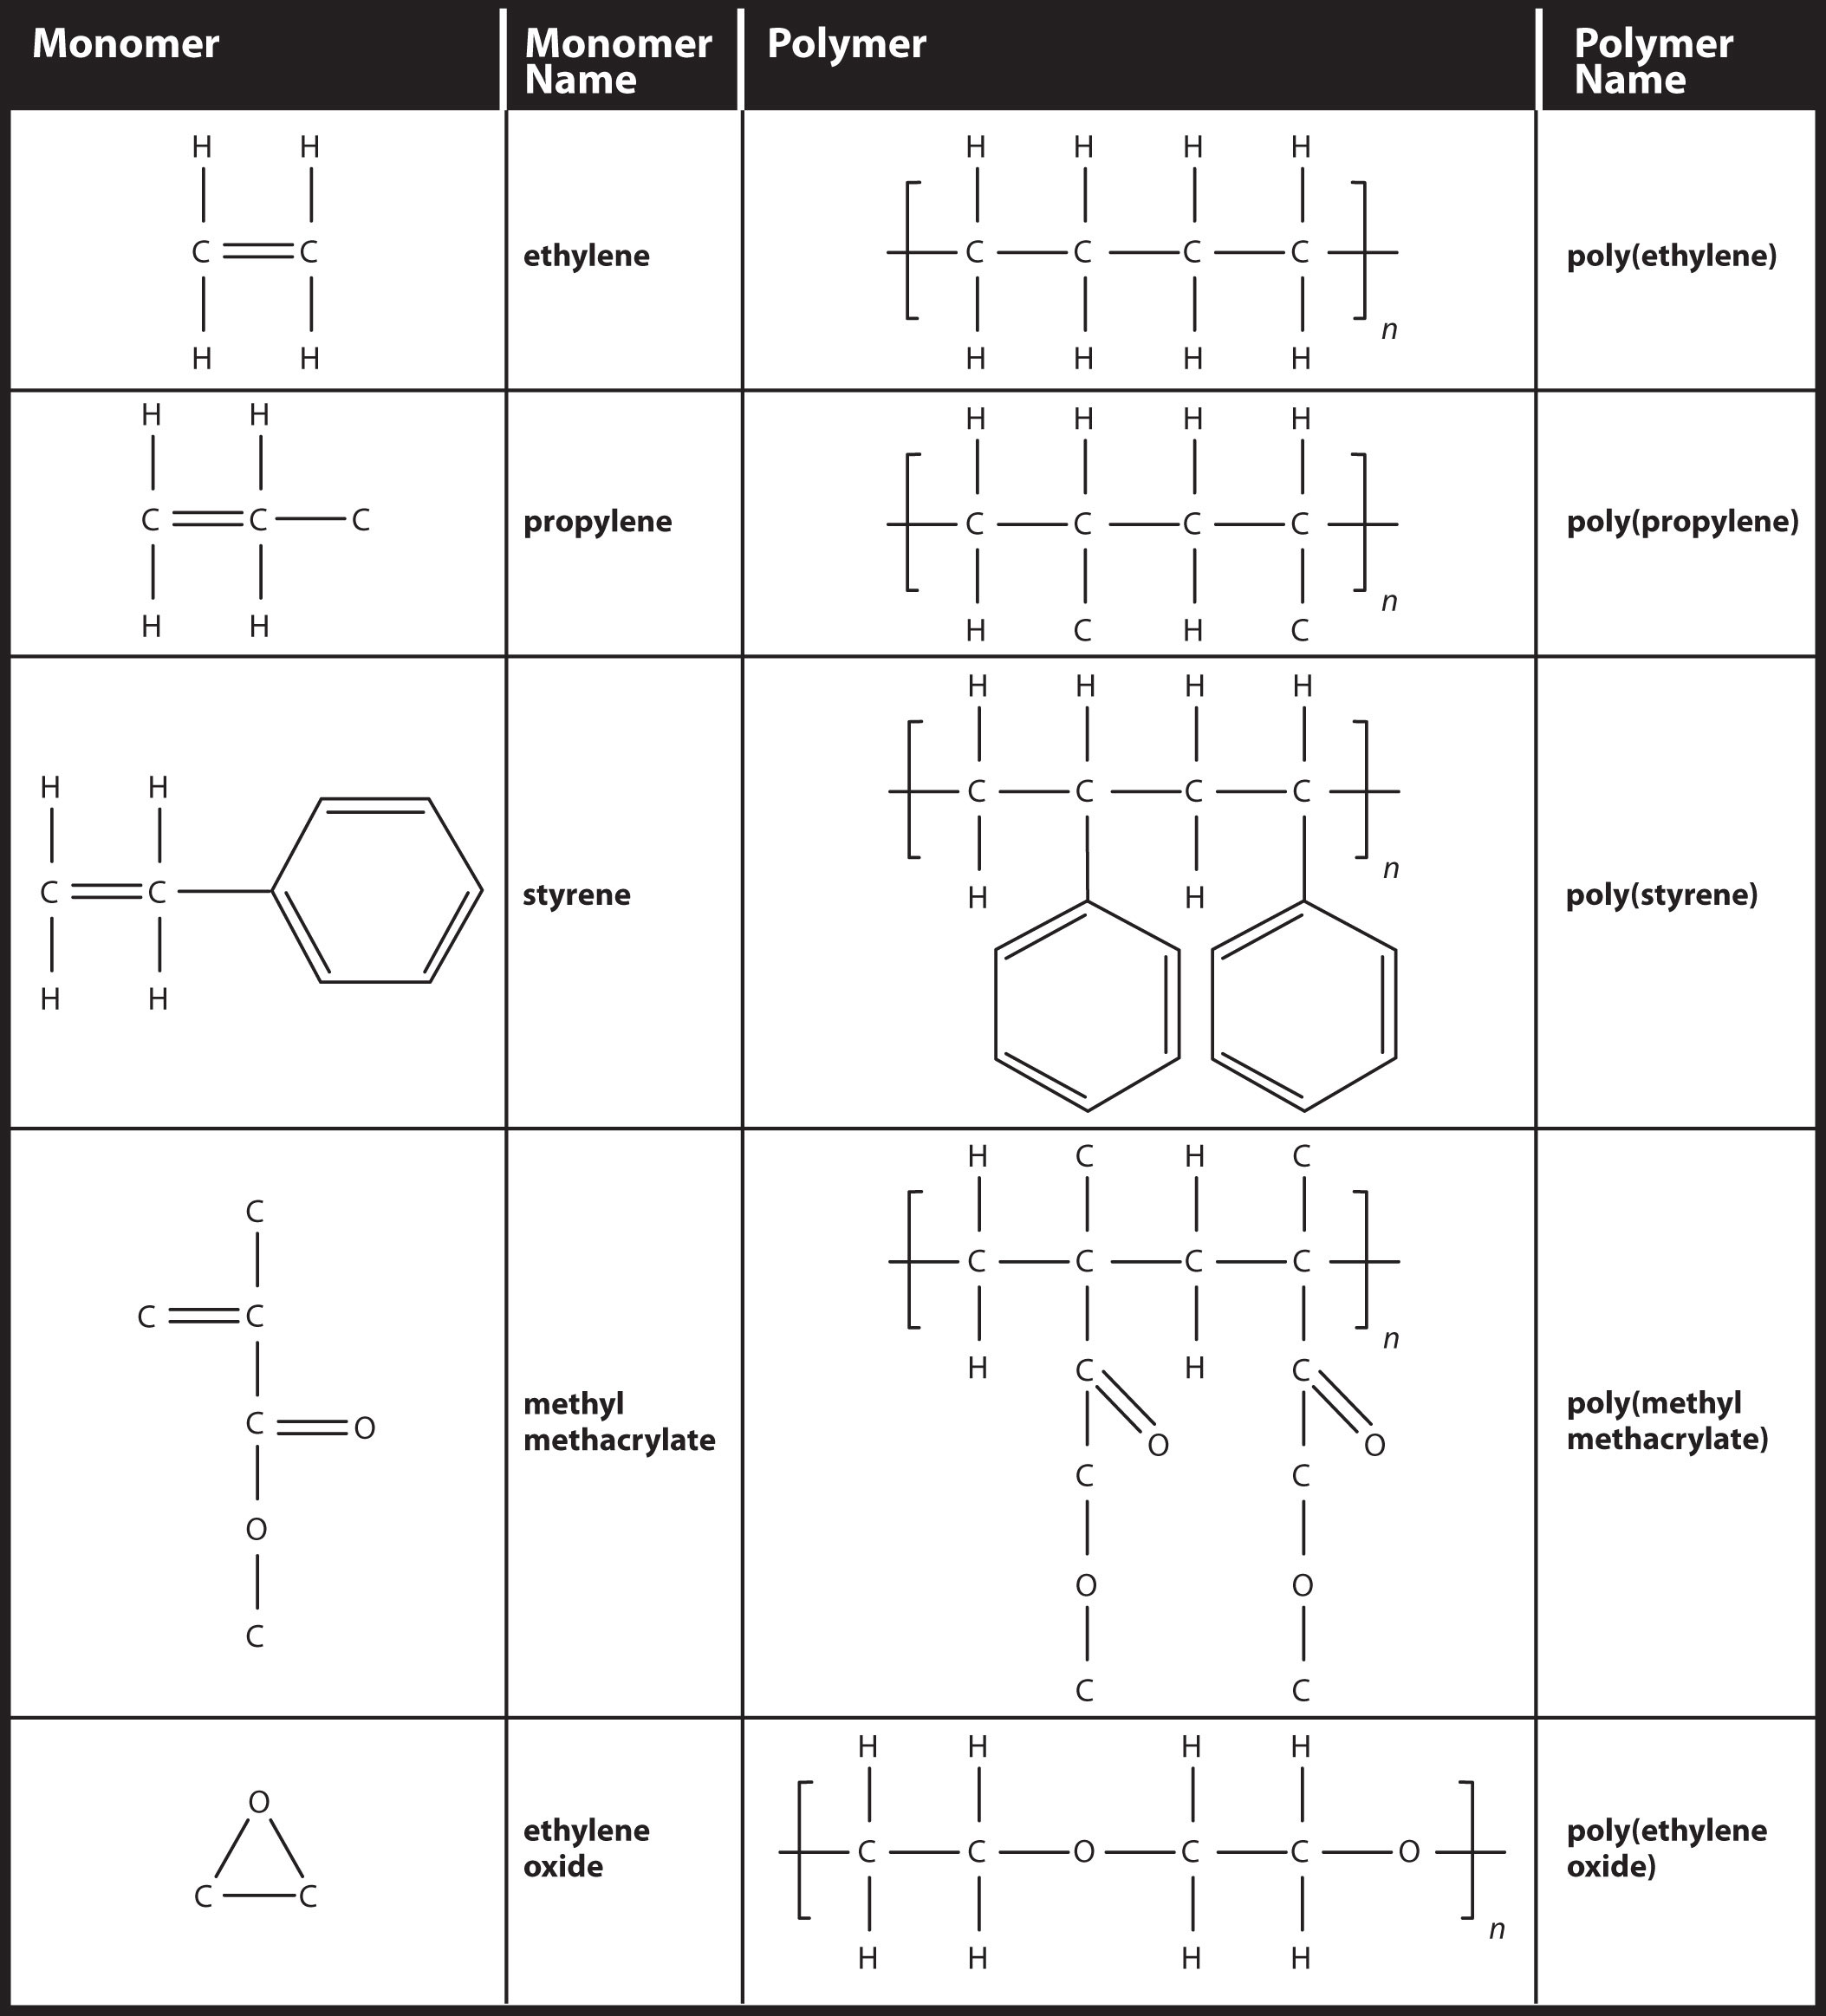 Structures of ethylene and polyethylene, propylene and polypropylene, stryene and polystyrene, methyl methacrylate and polymethyl methacrylate, and ethylene oxide and polyethylene oxide.